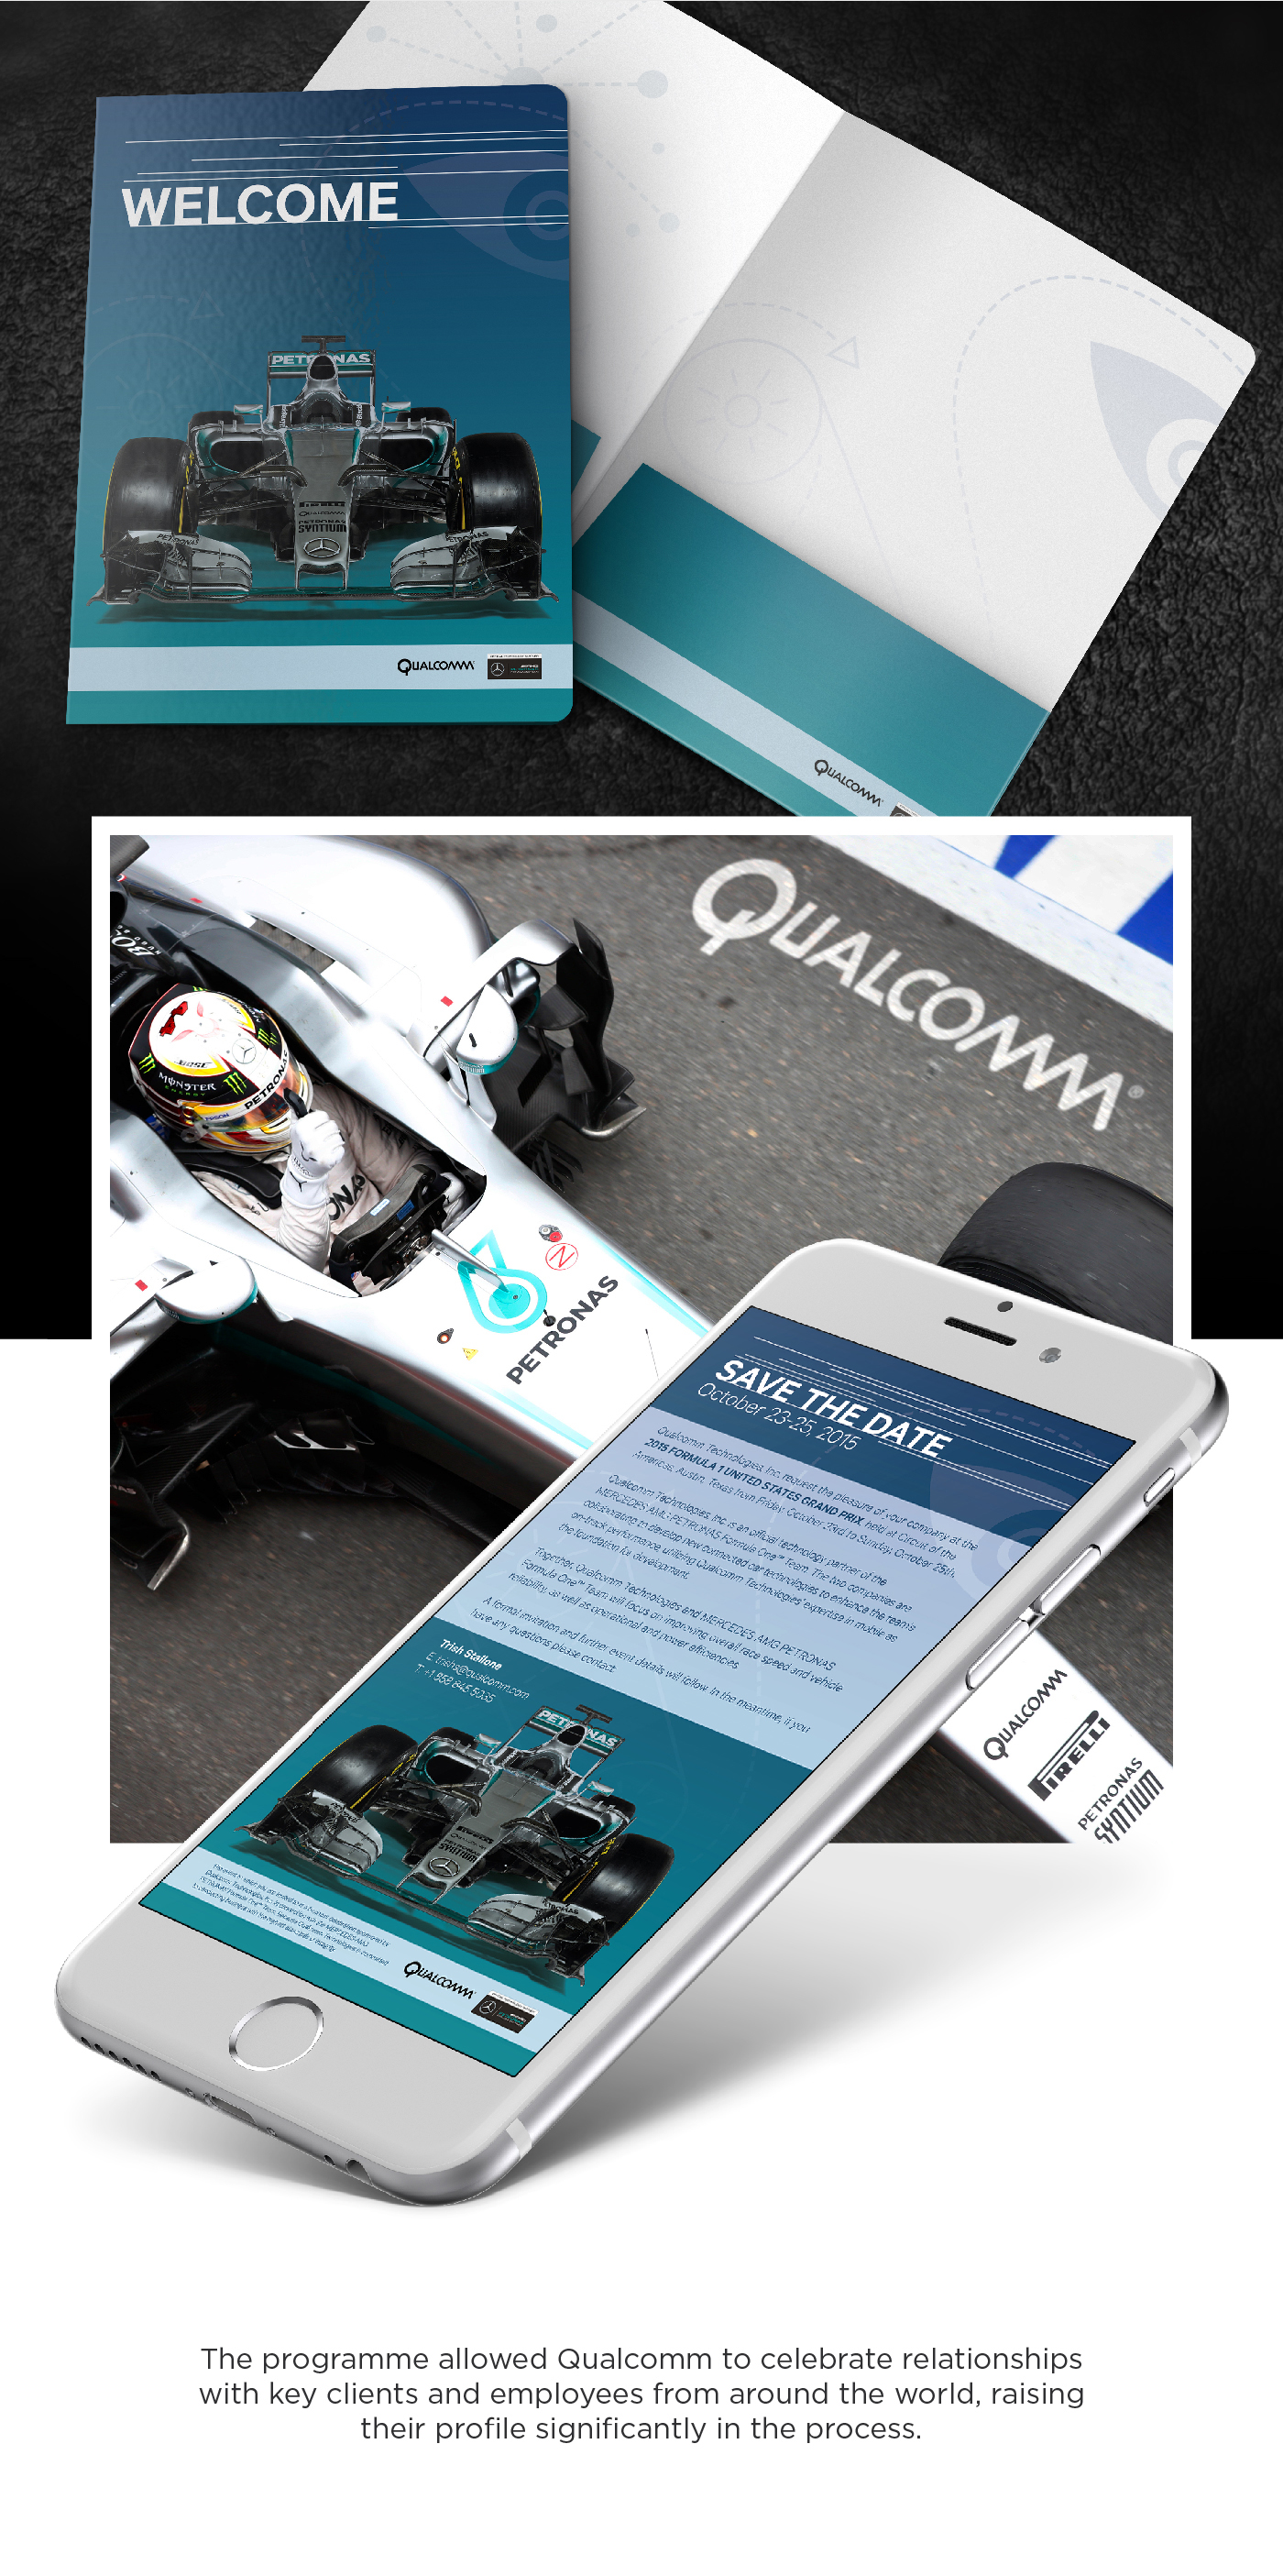 Qualcomm mercedes f1 Formula 1 guest programme Motorsport Racing Technology